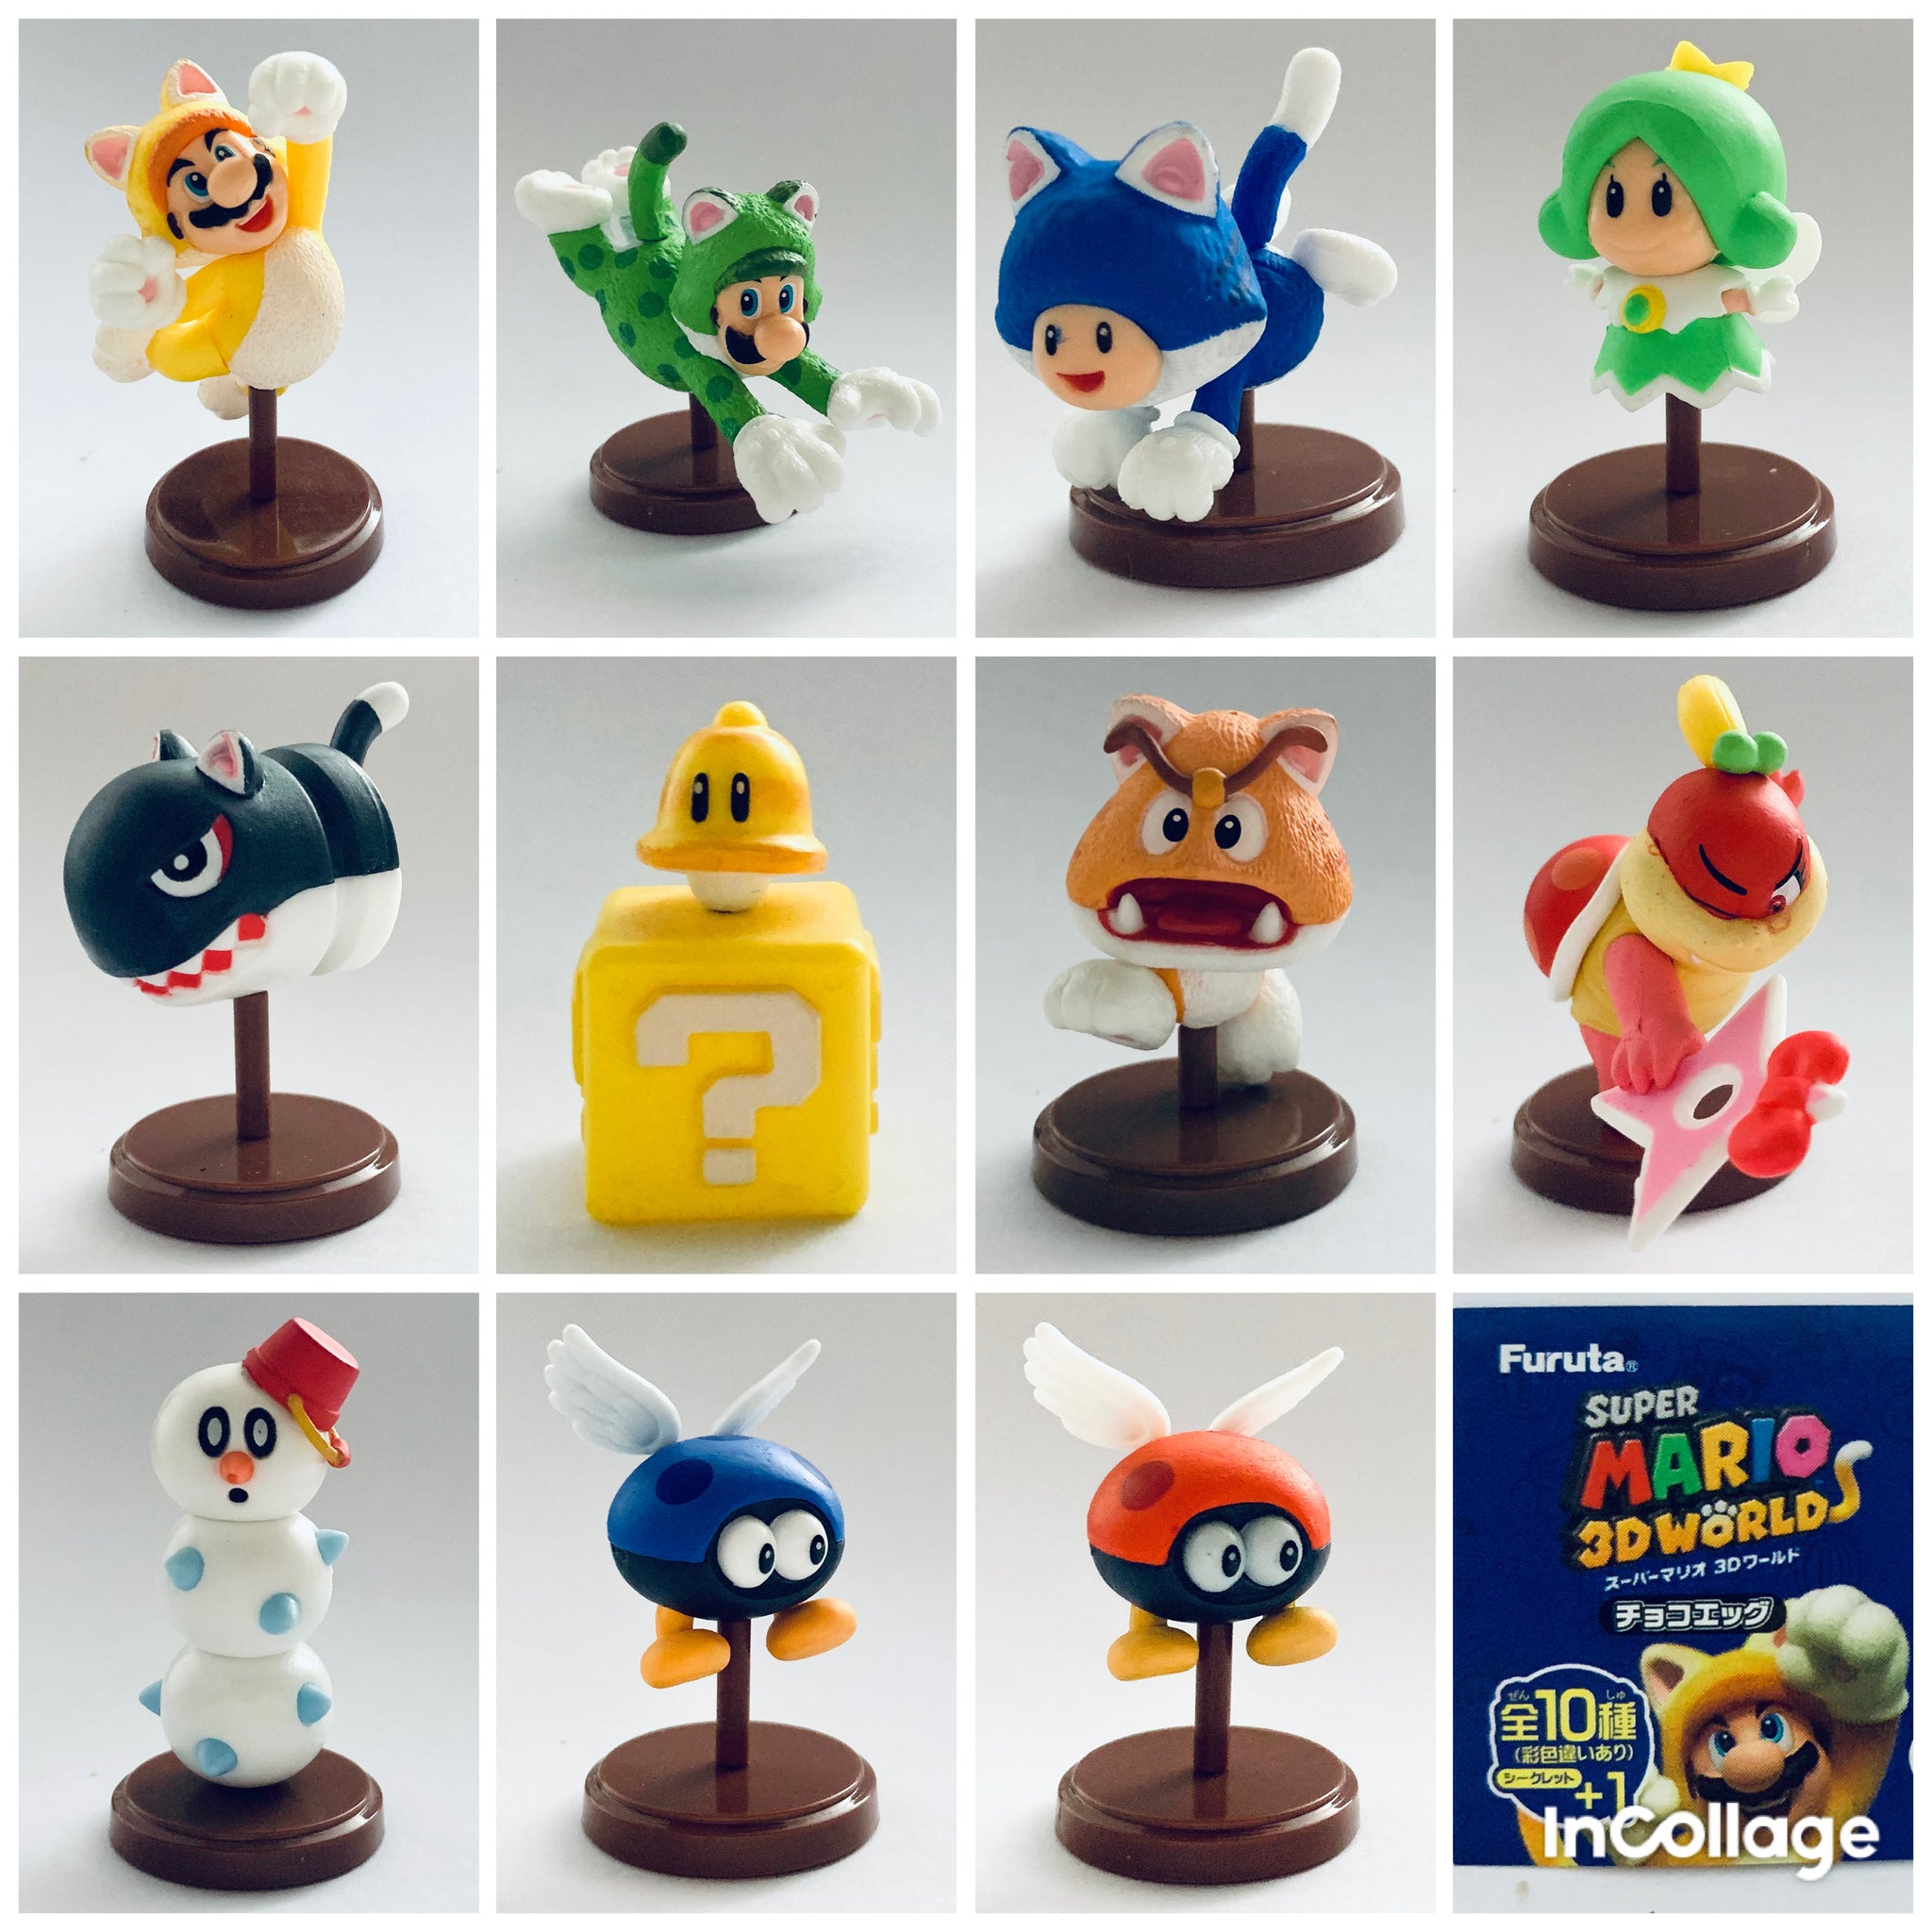 Super Mario 3D Worlds - Choco Egg - Set of 12 Mini Figures